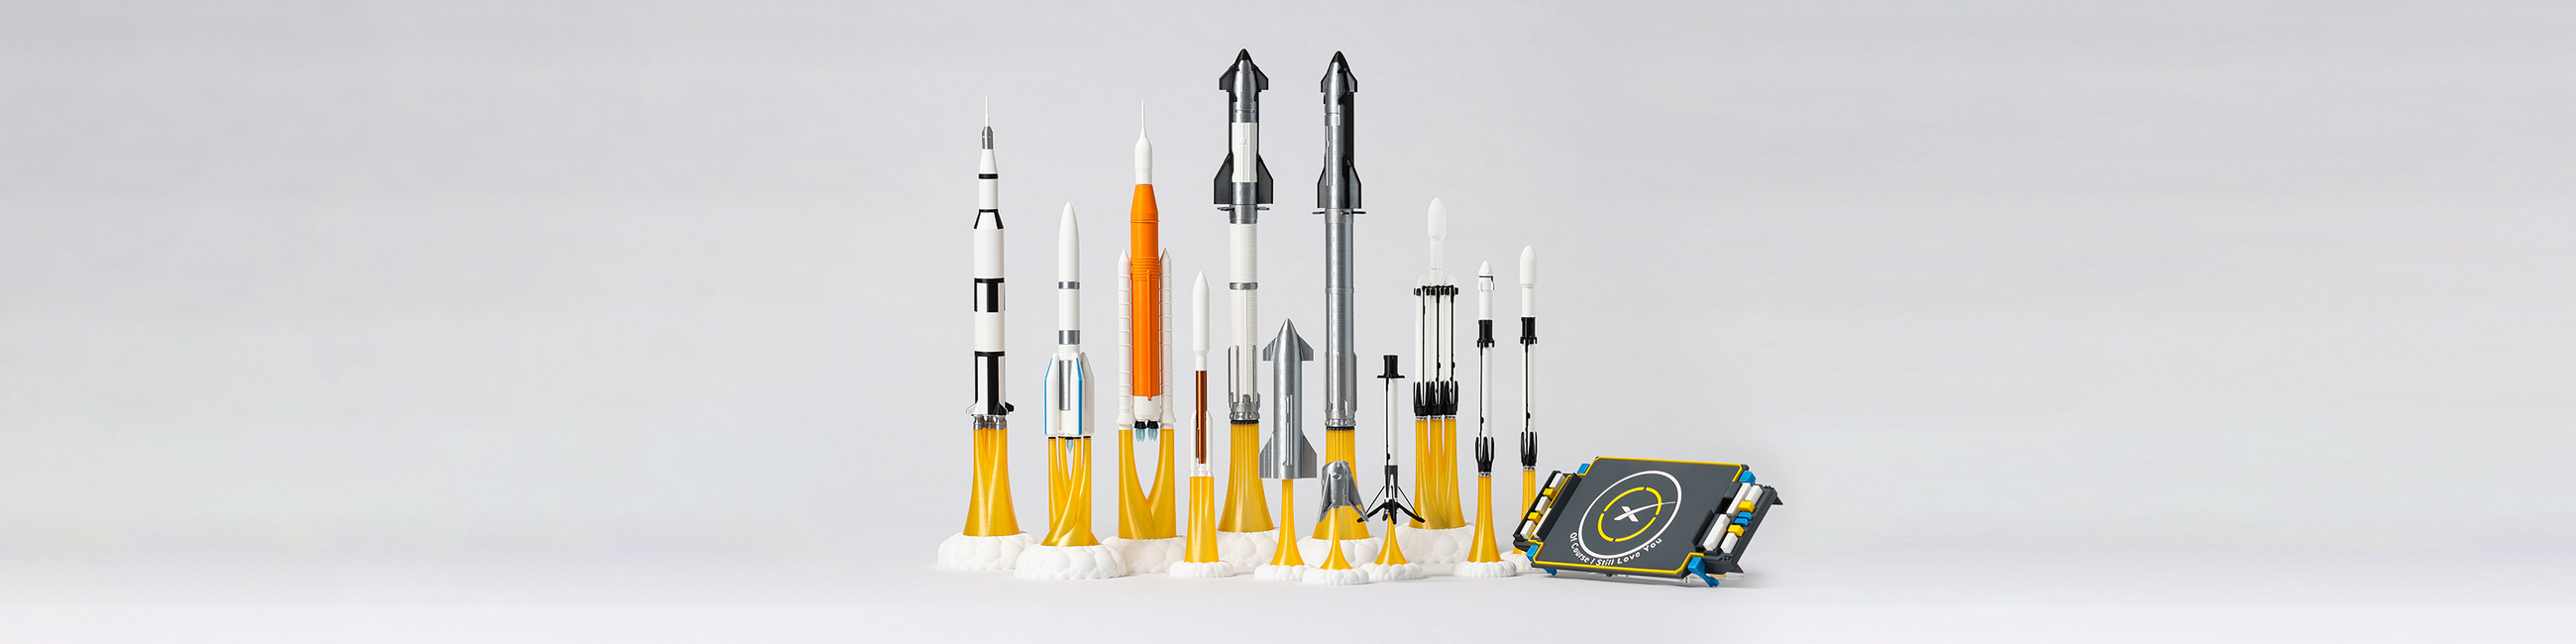 SpaceX Raketen Modelle